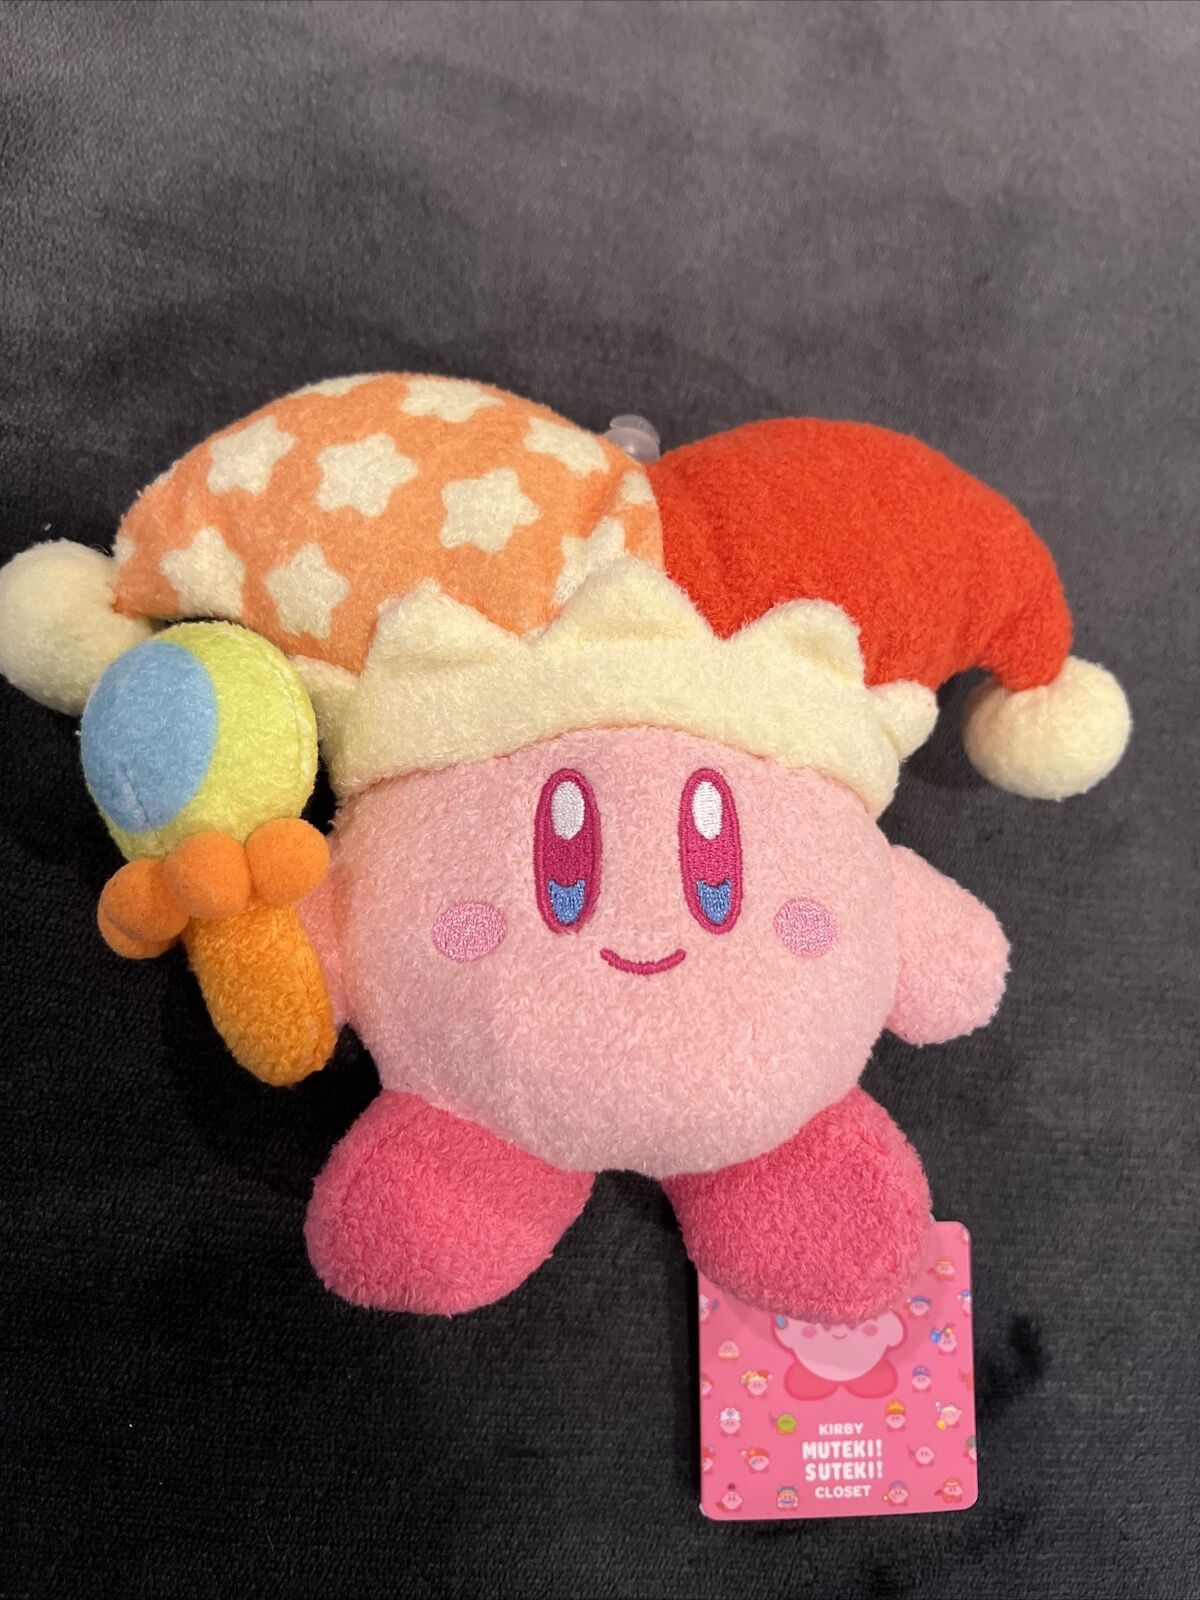 Sanei Kirby MUTEKI SUTEKI CLOSET Beam Plush Doll Stuffed Toy Japan Nintendo